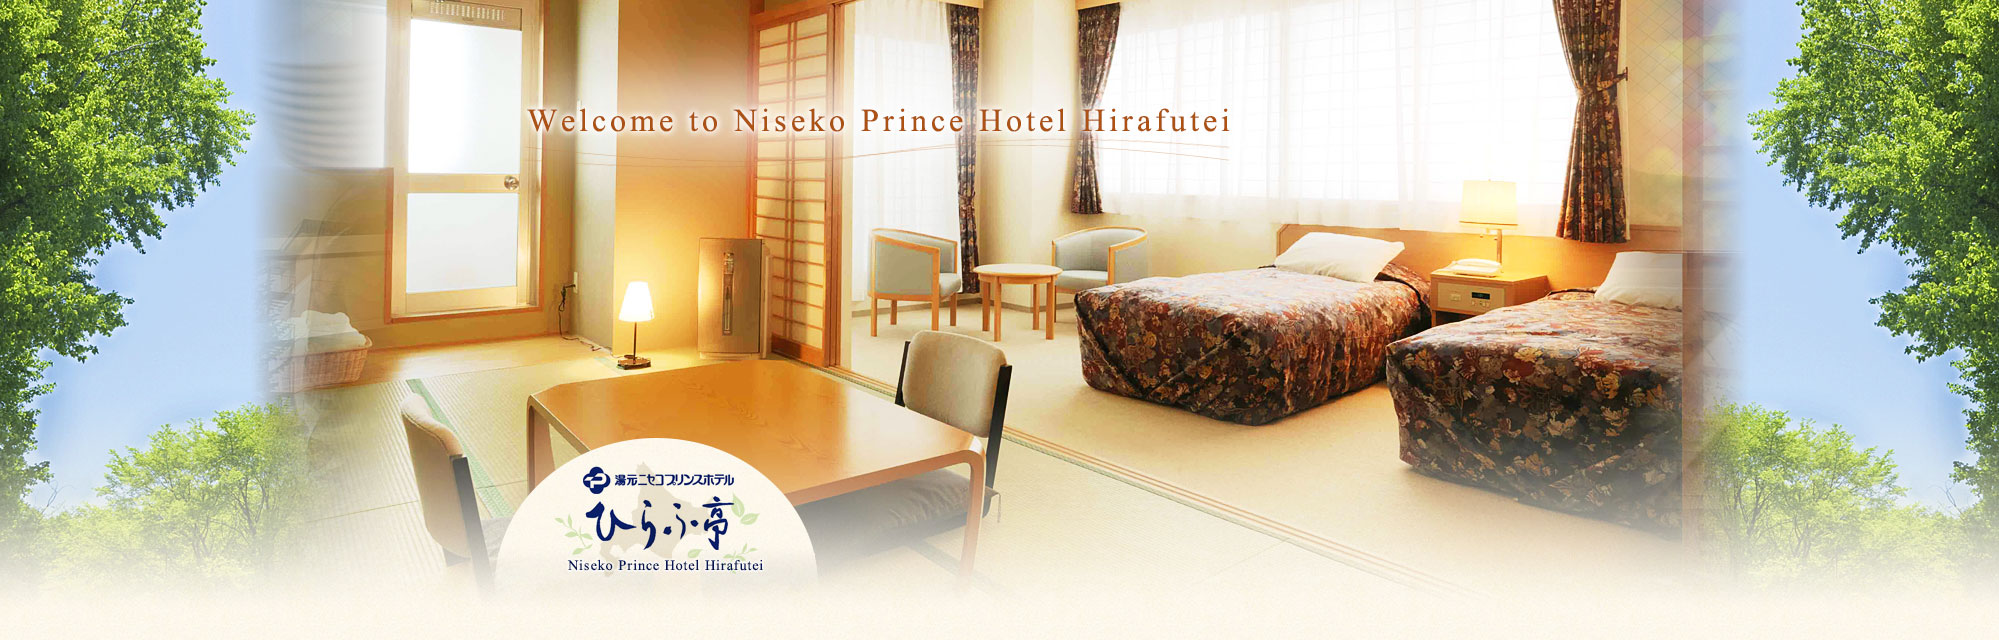 Welcome to Niseko Prince Hotel Hirafutei